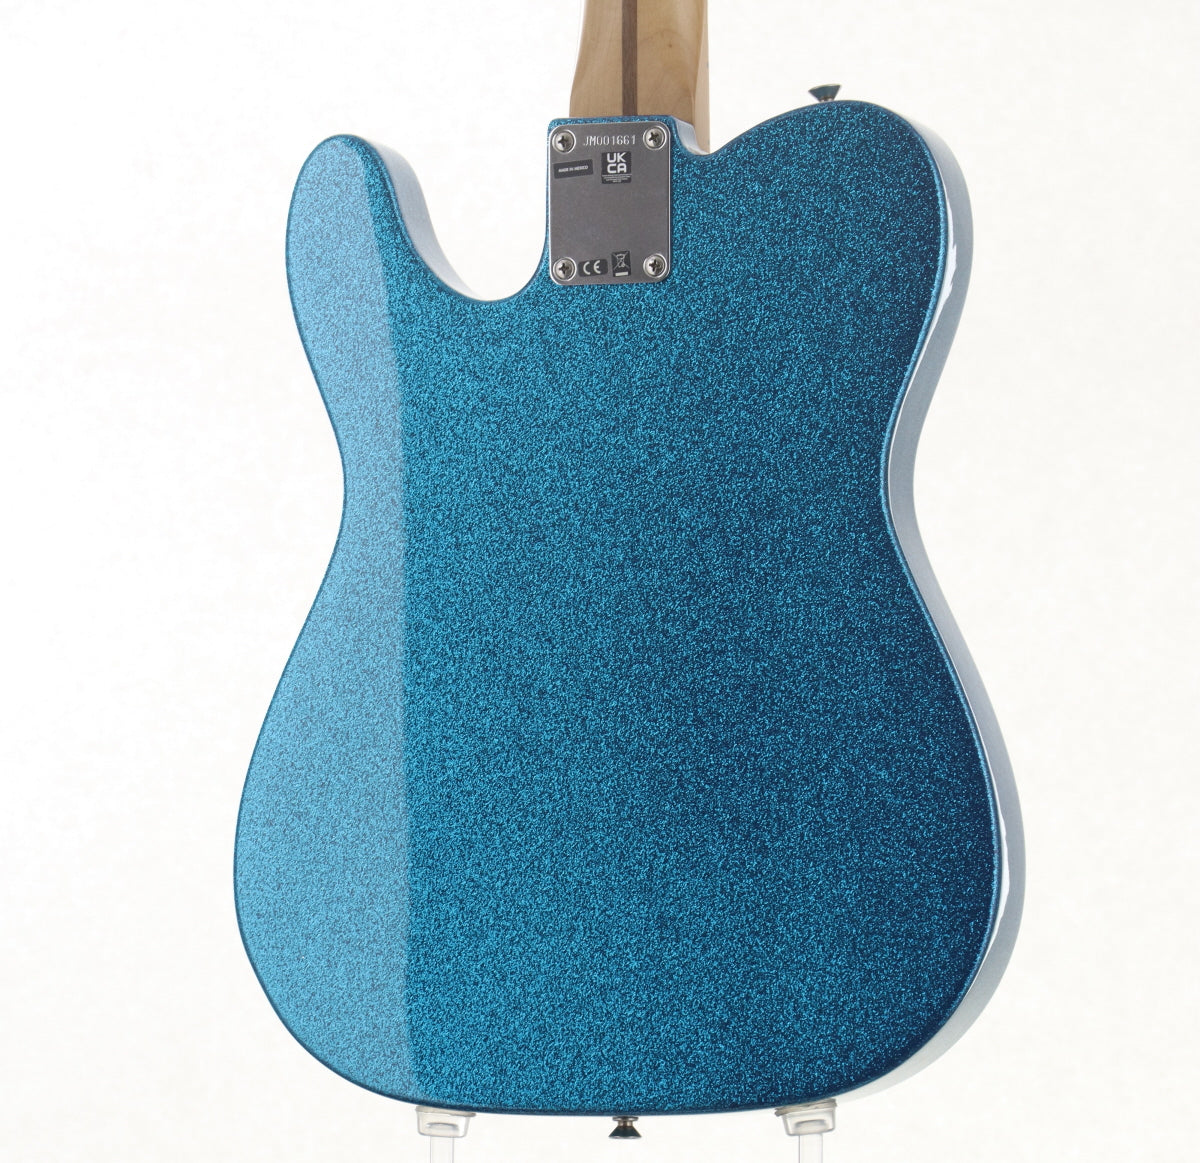 [SN JM001661] USED Fender / J Mascis Telecaster / Bottle Rocket Blue Flake [06]